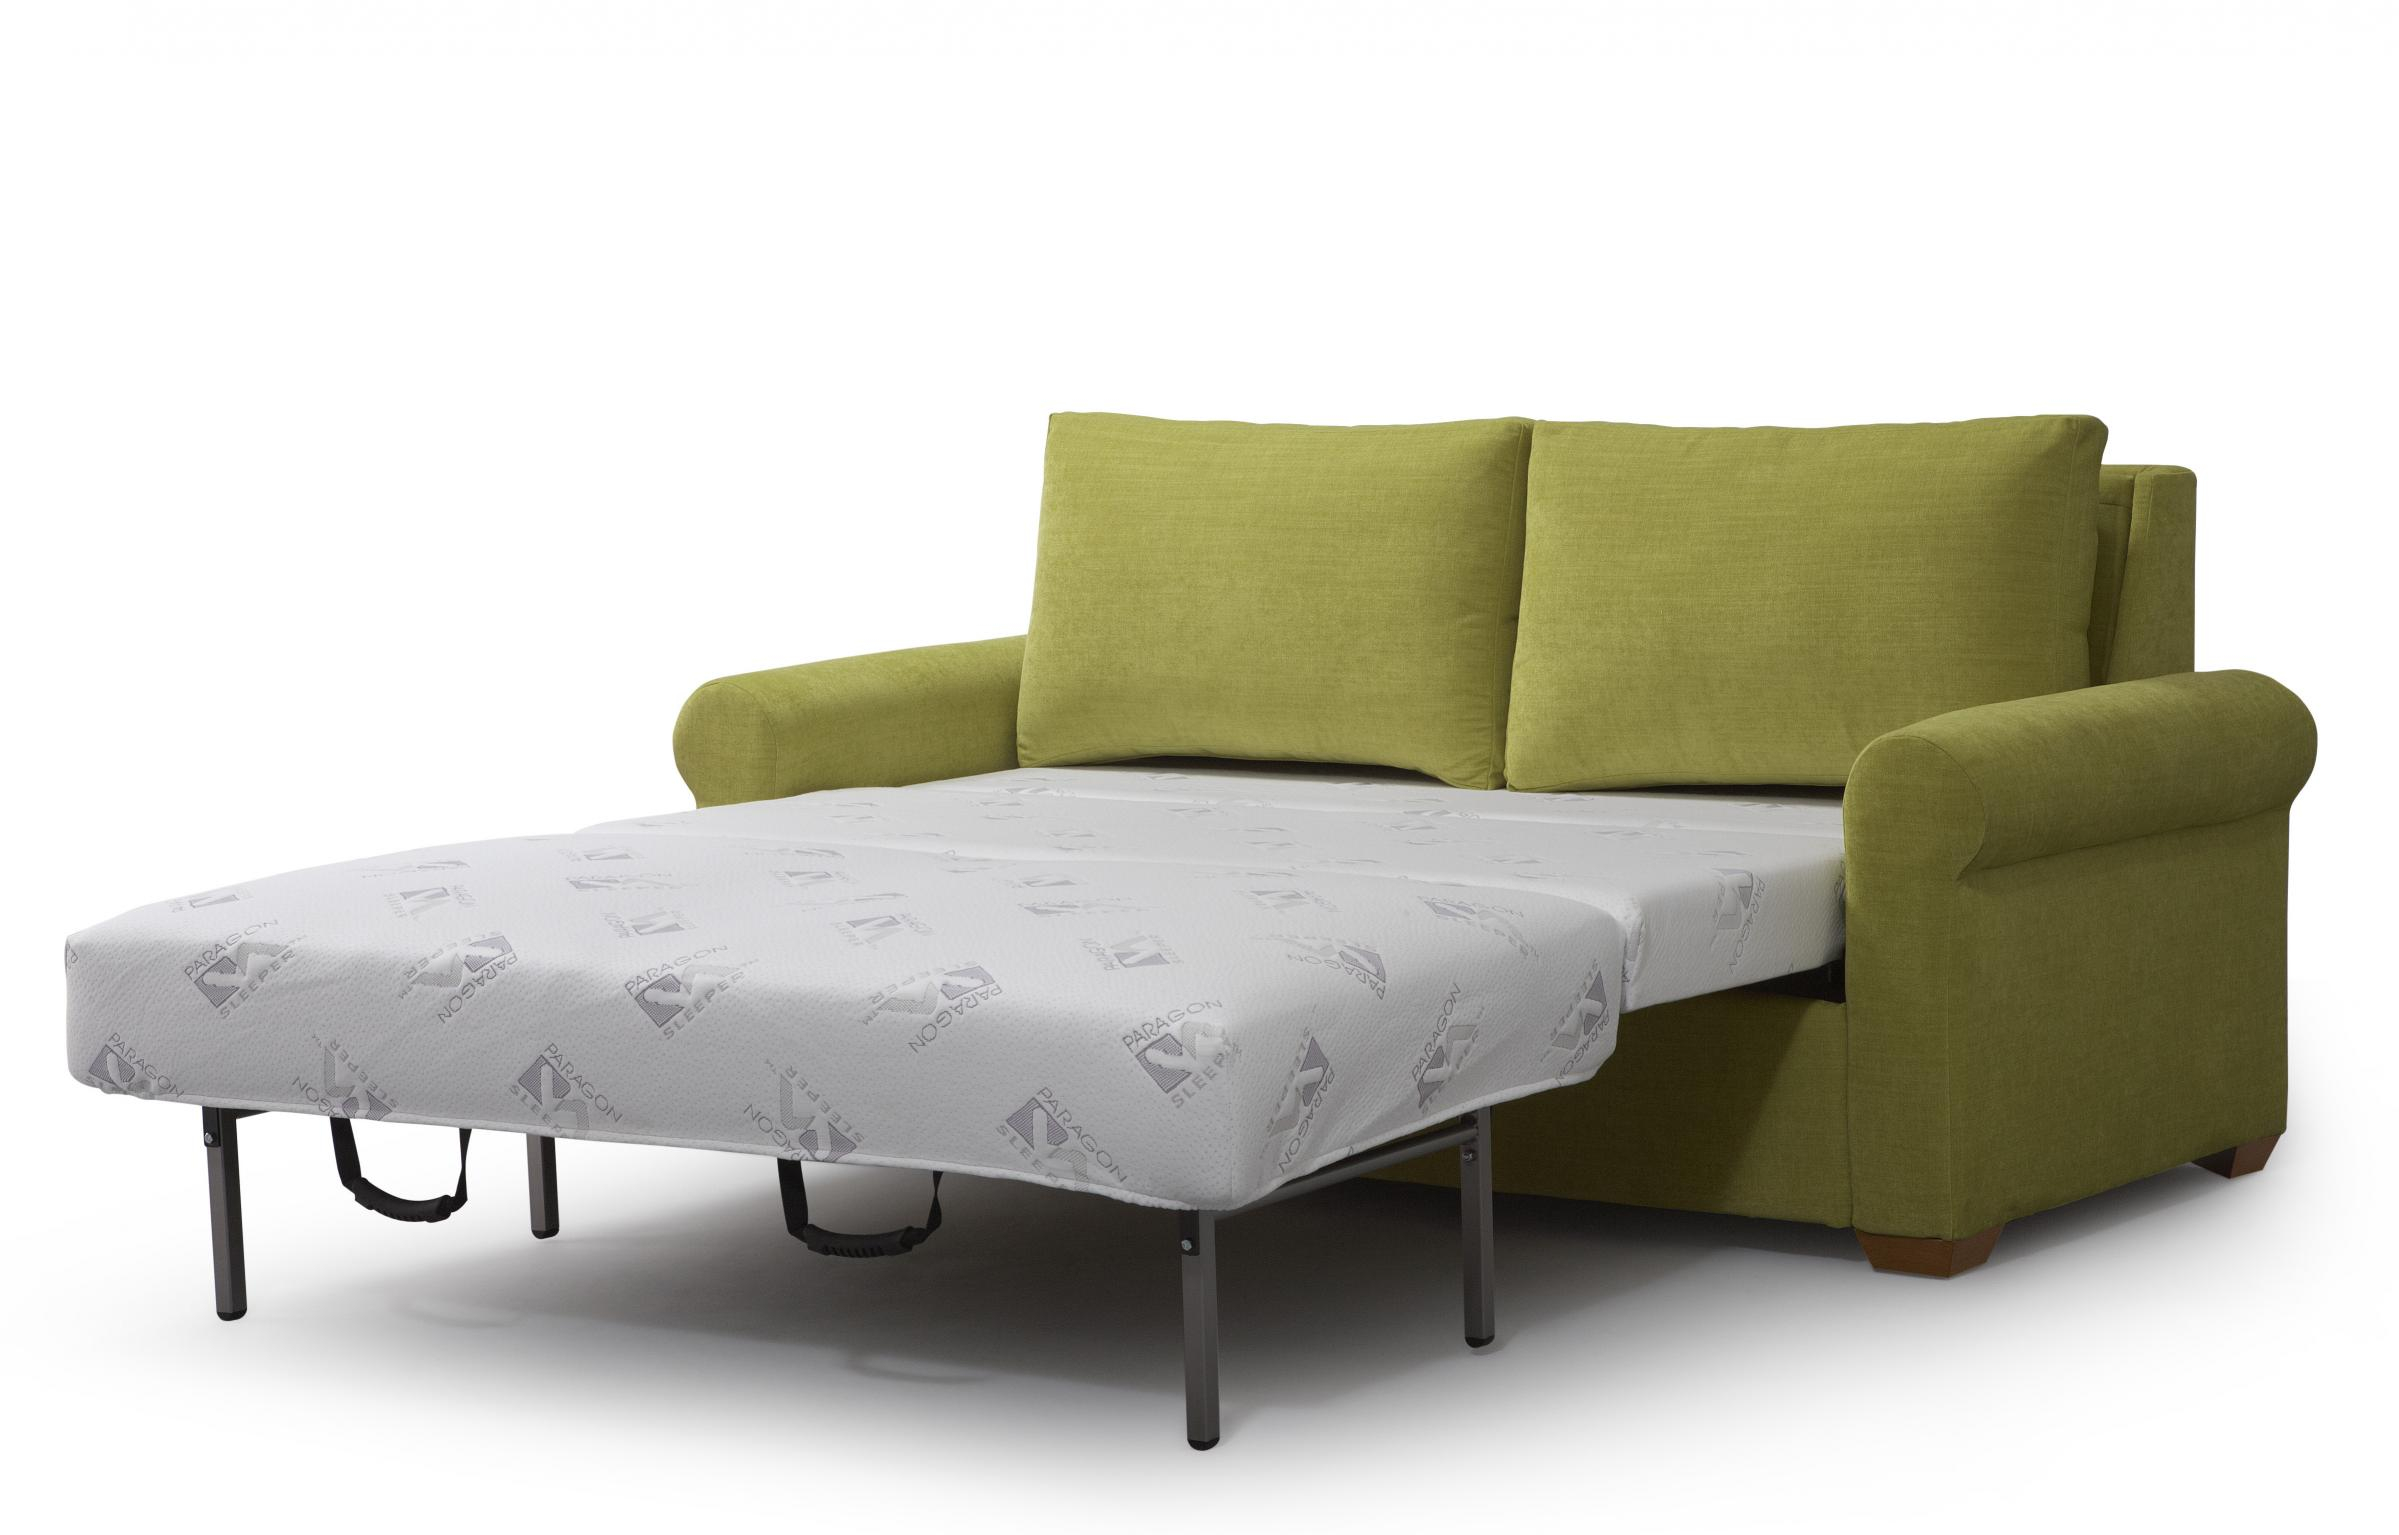 common sleeper sofa mattress size